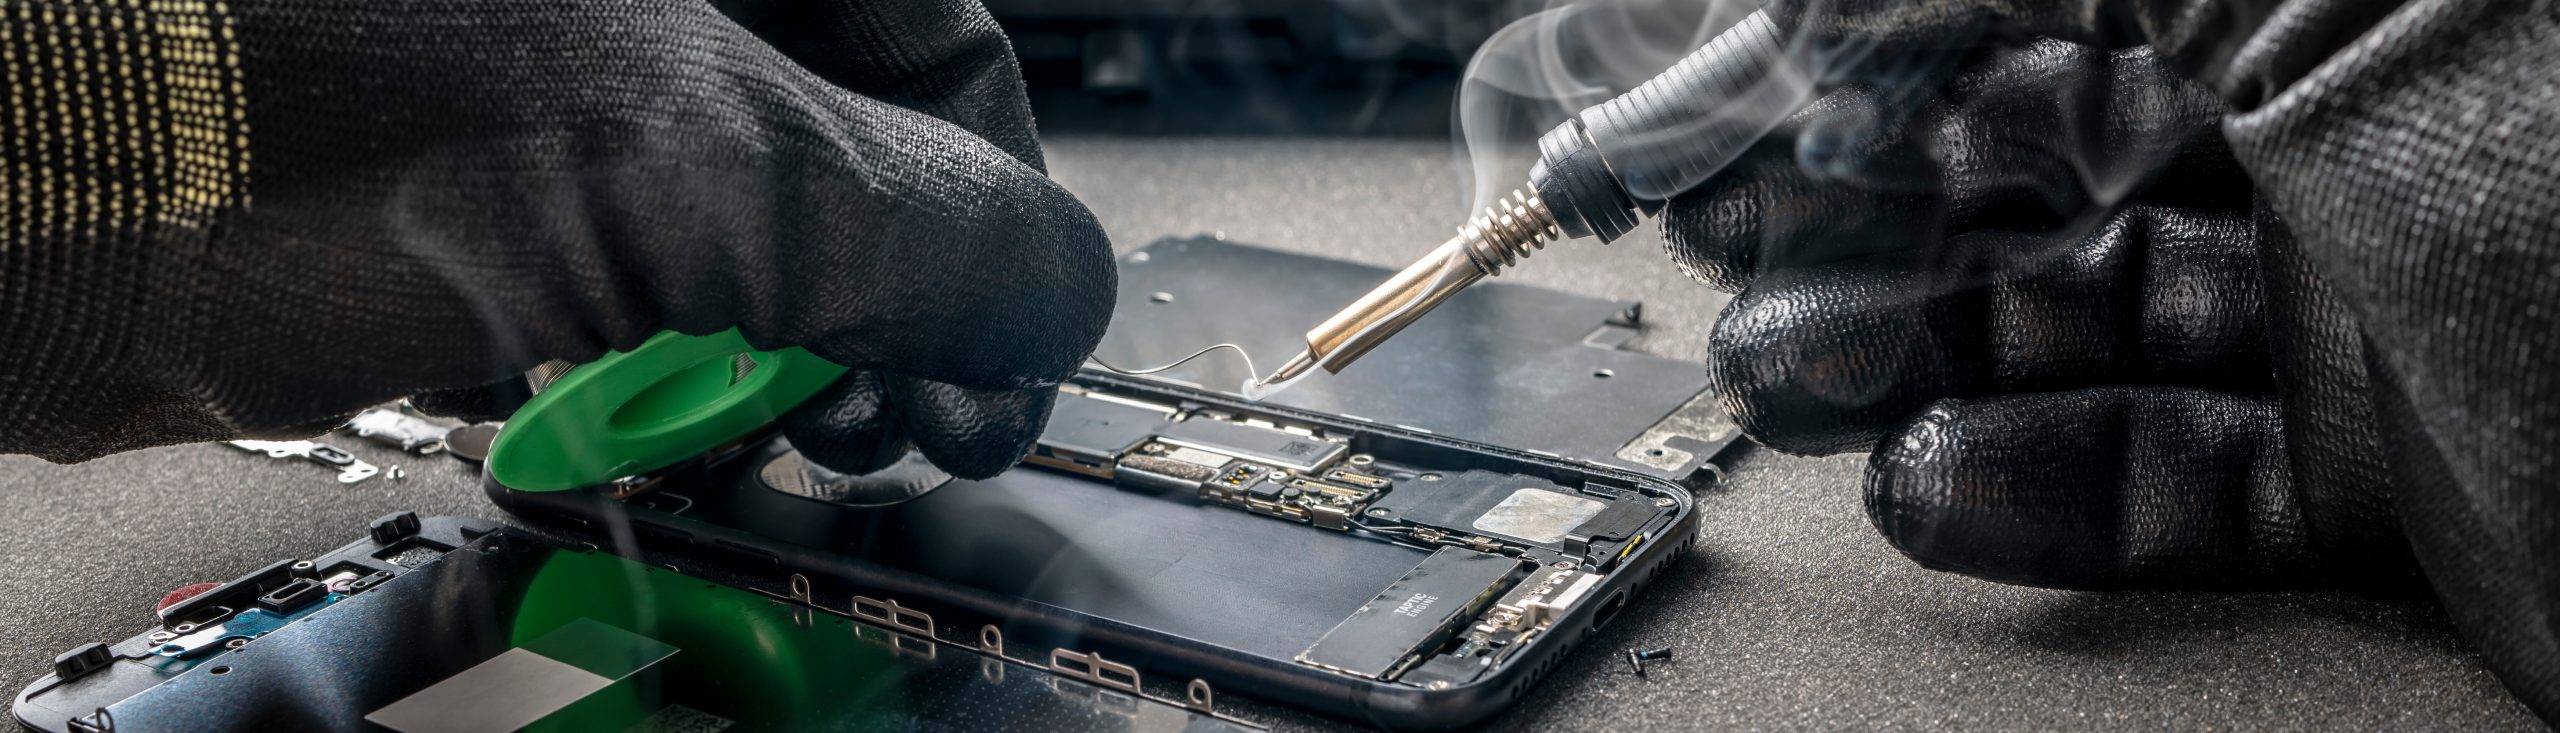 iphone being repaired at RockIT Repairs